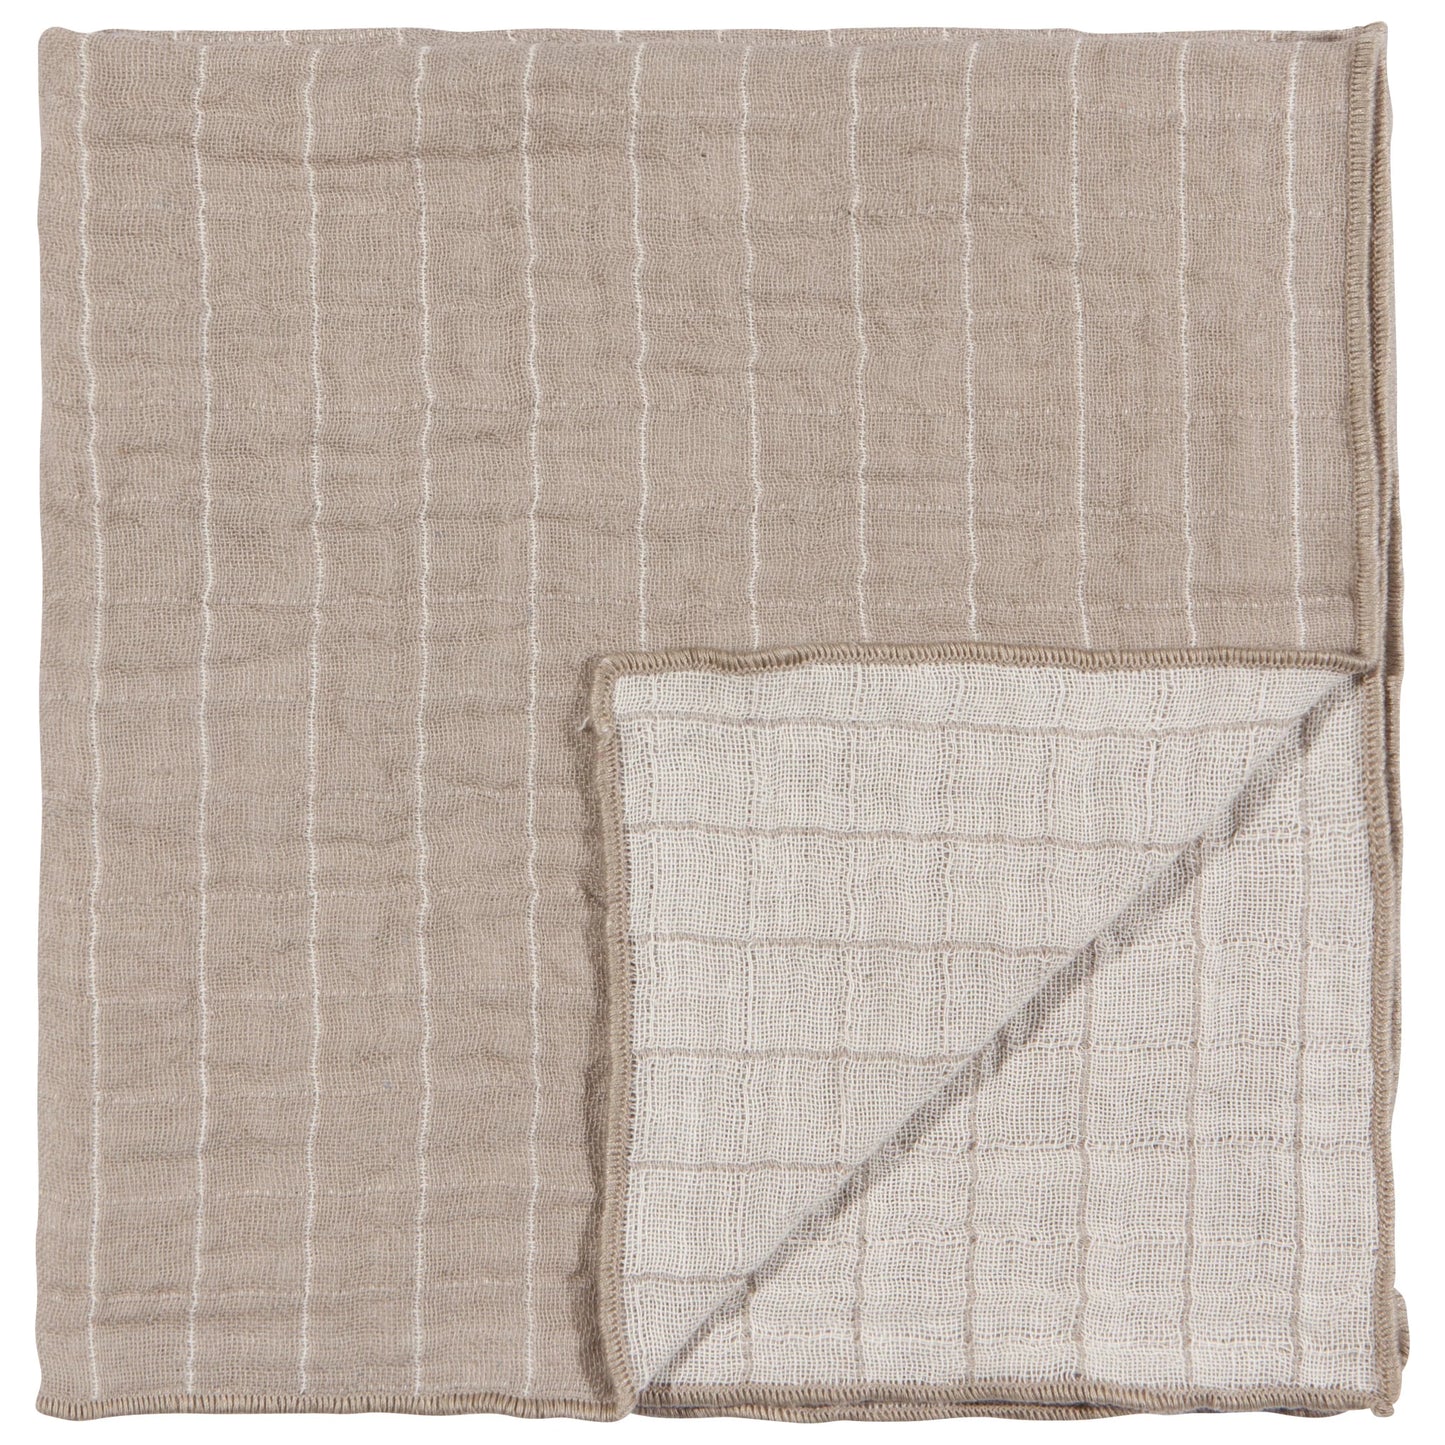 Napkins Double Weave 100% Cotton Set of 2 - Dove Gray